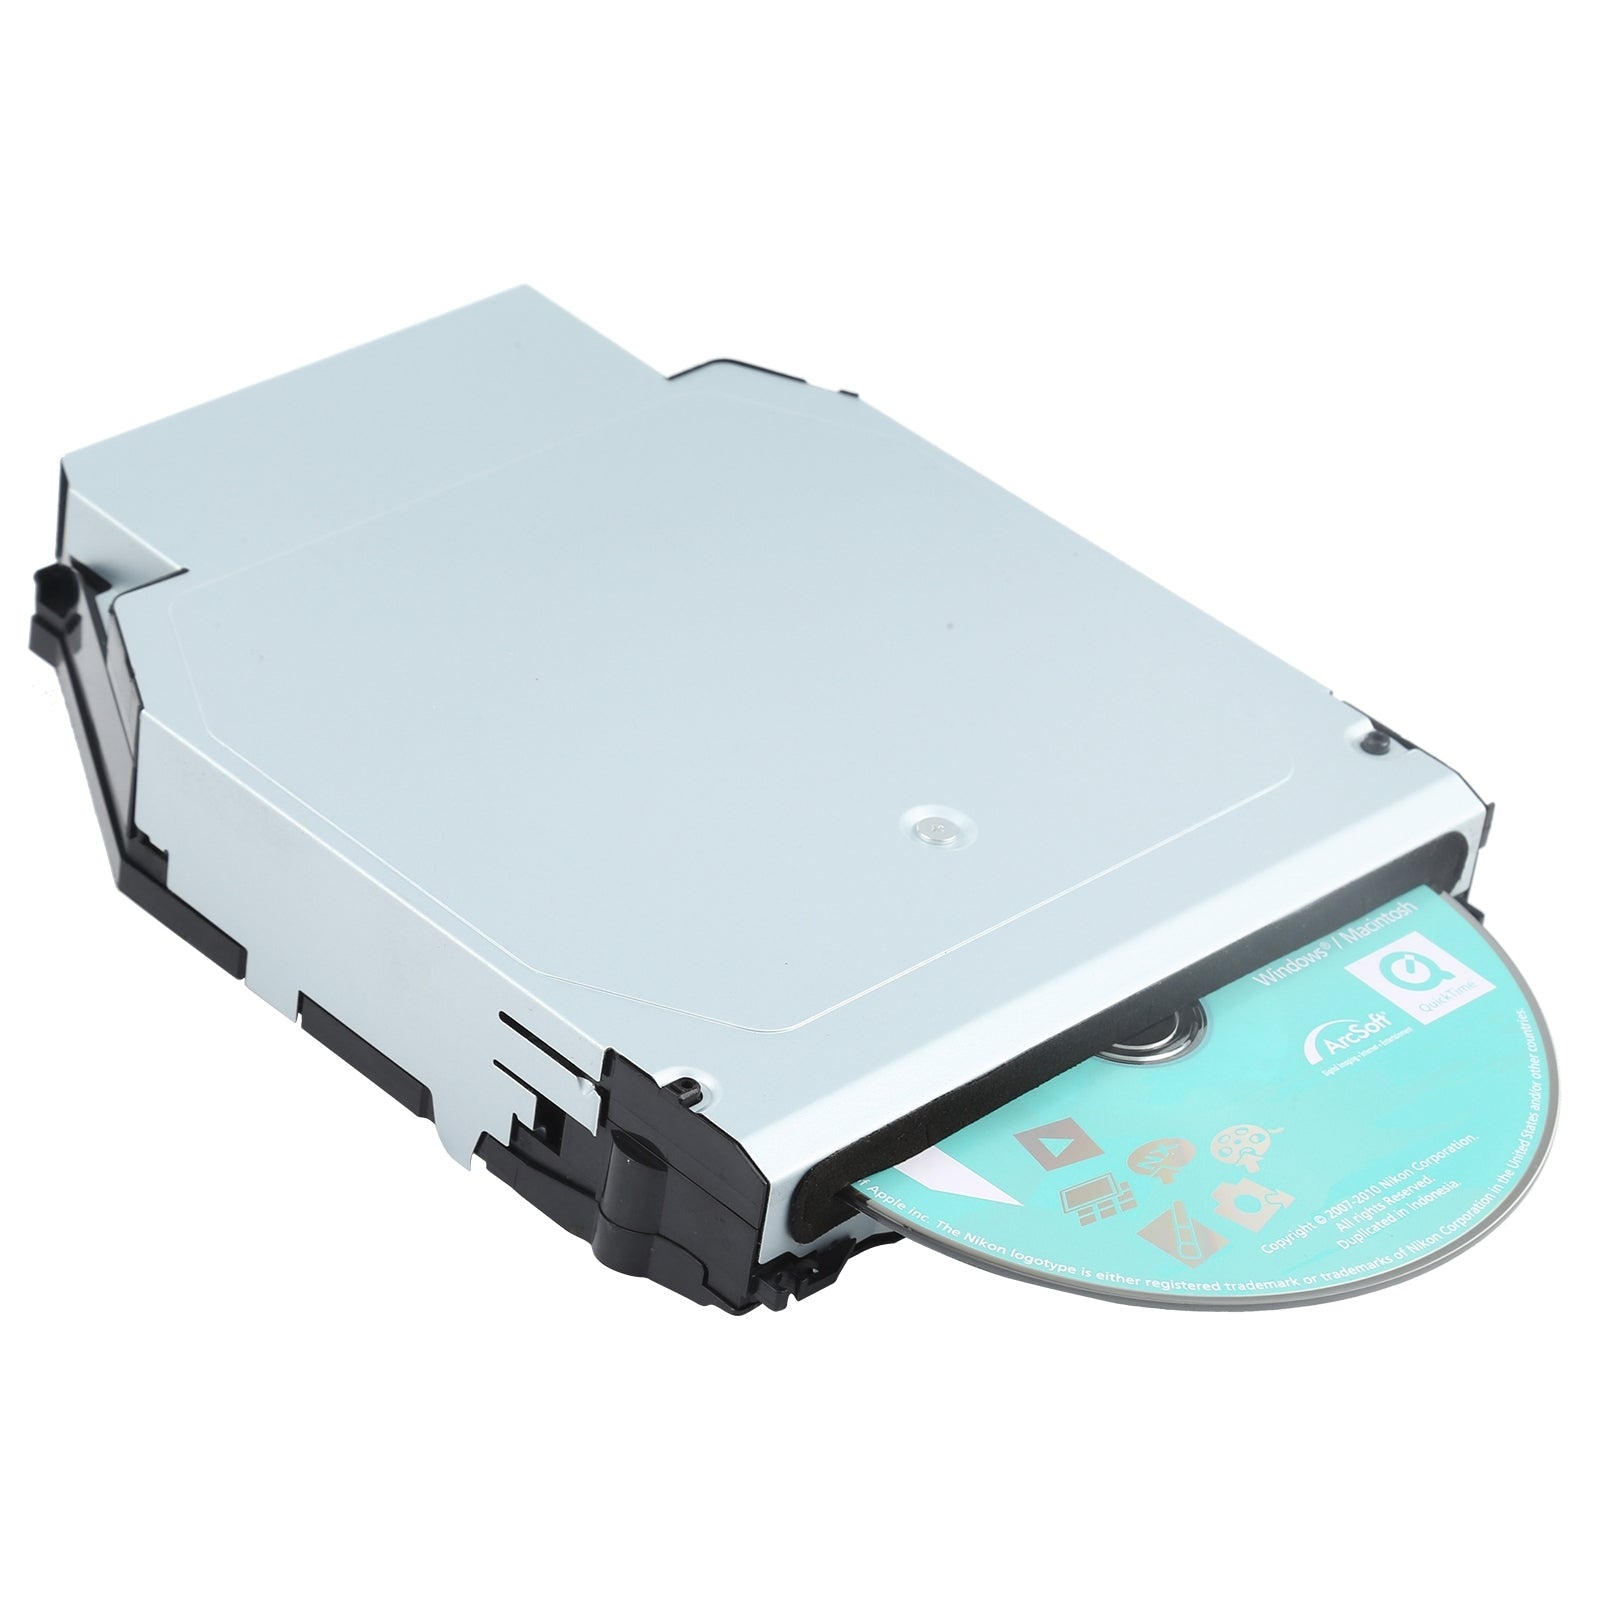 Complete Unit DVD Reader Games KEM-450DAA Sony Play Station 3 PS3 Slim